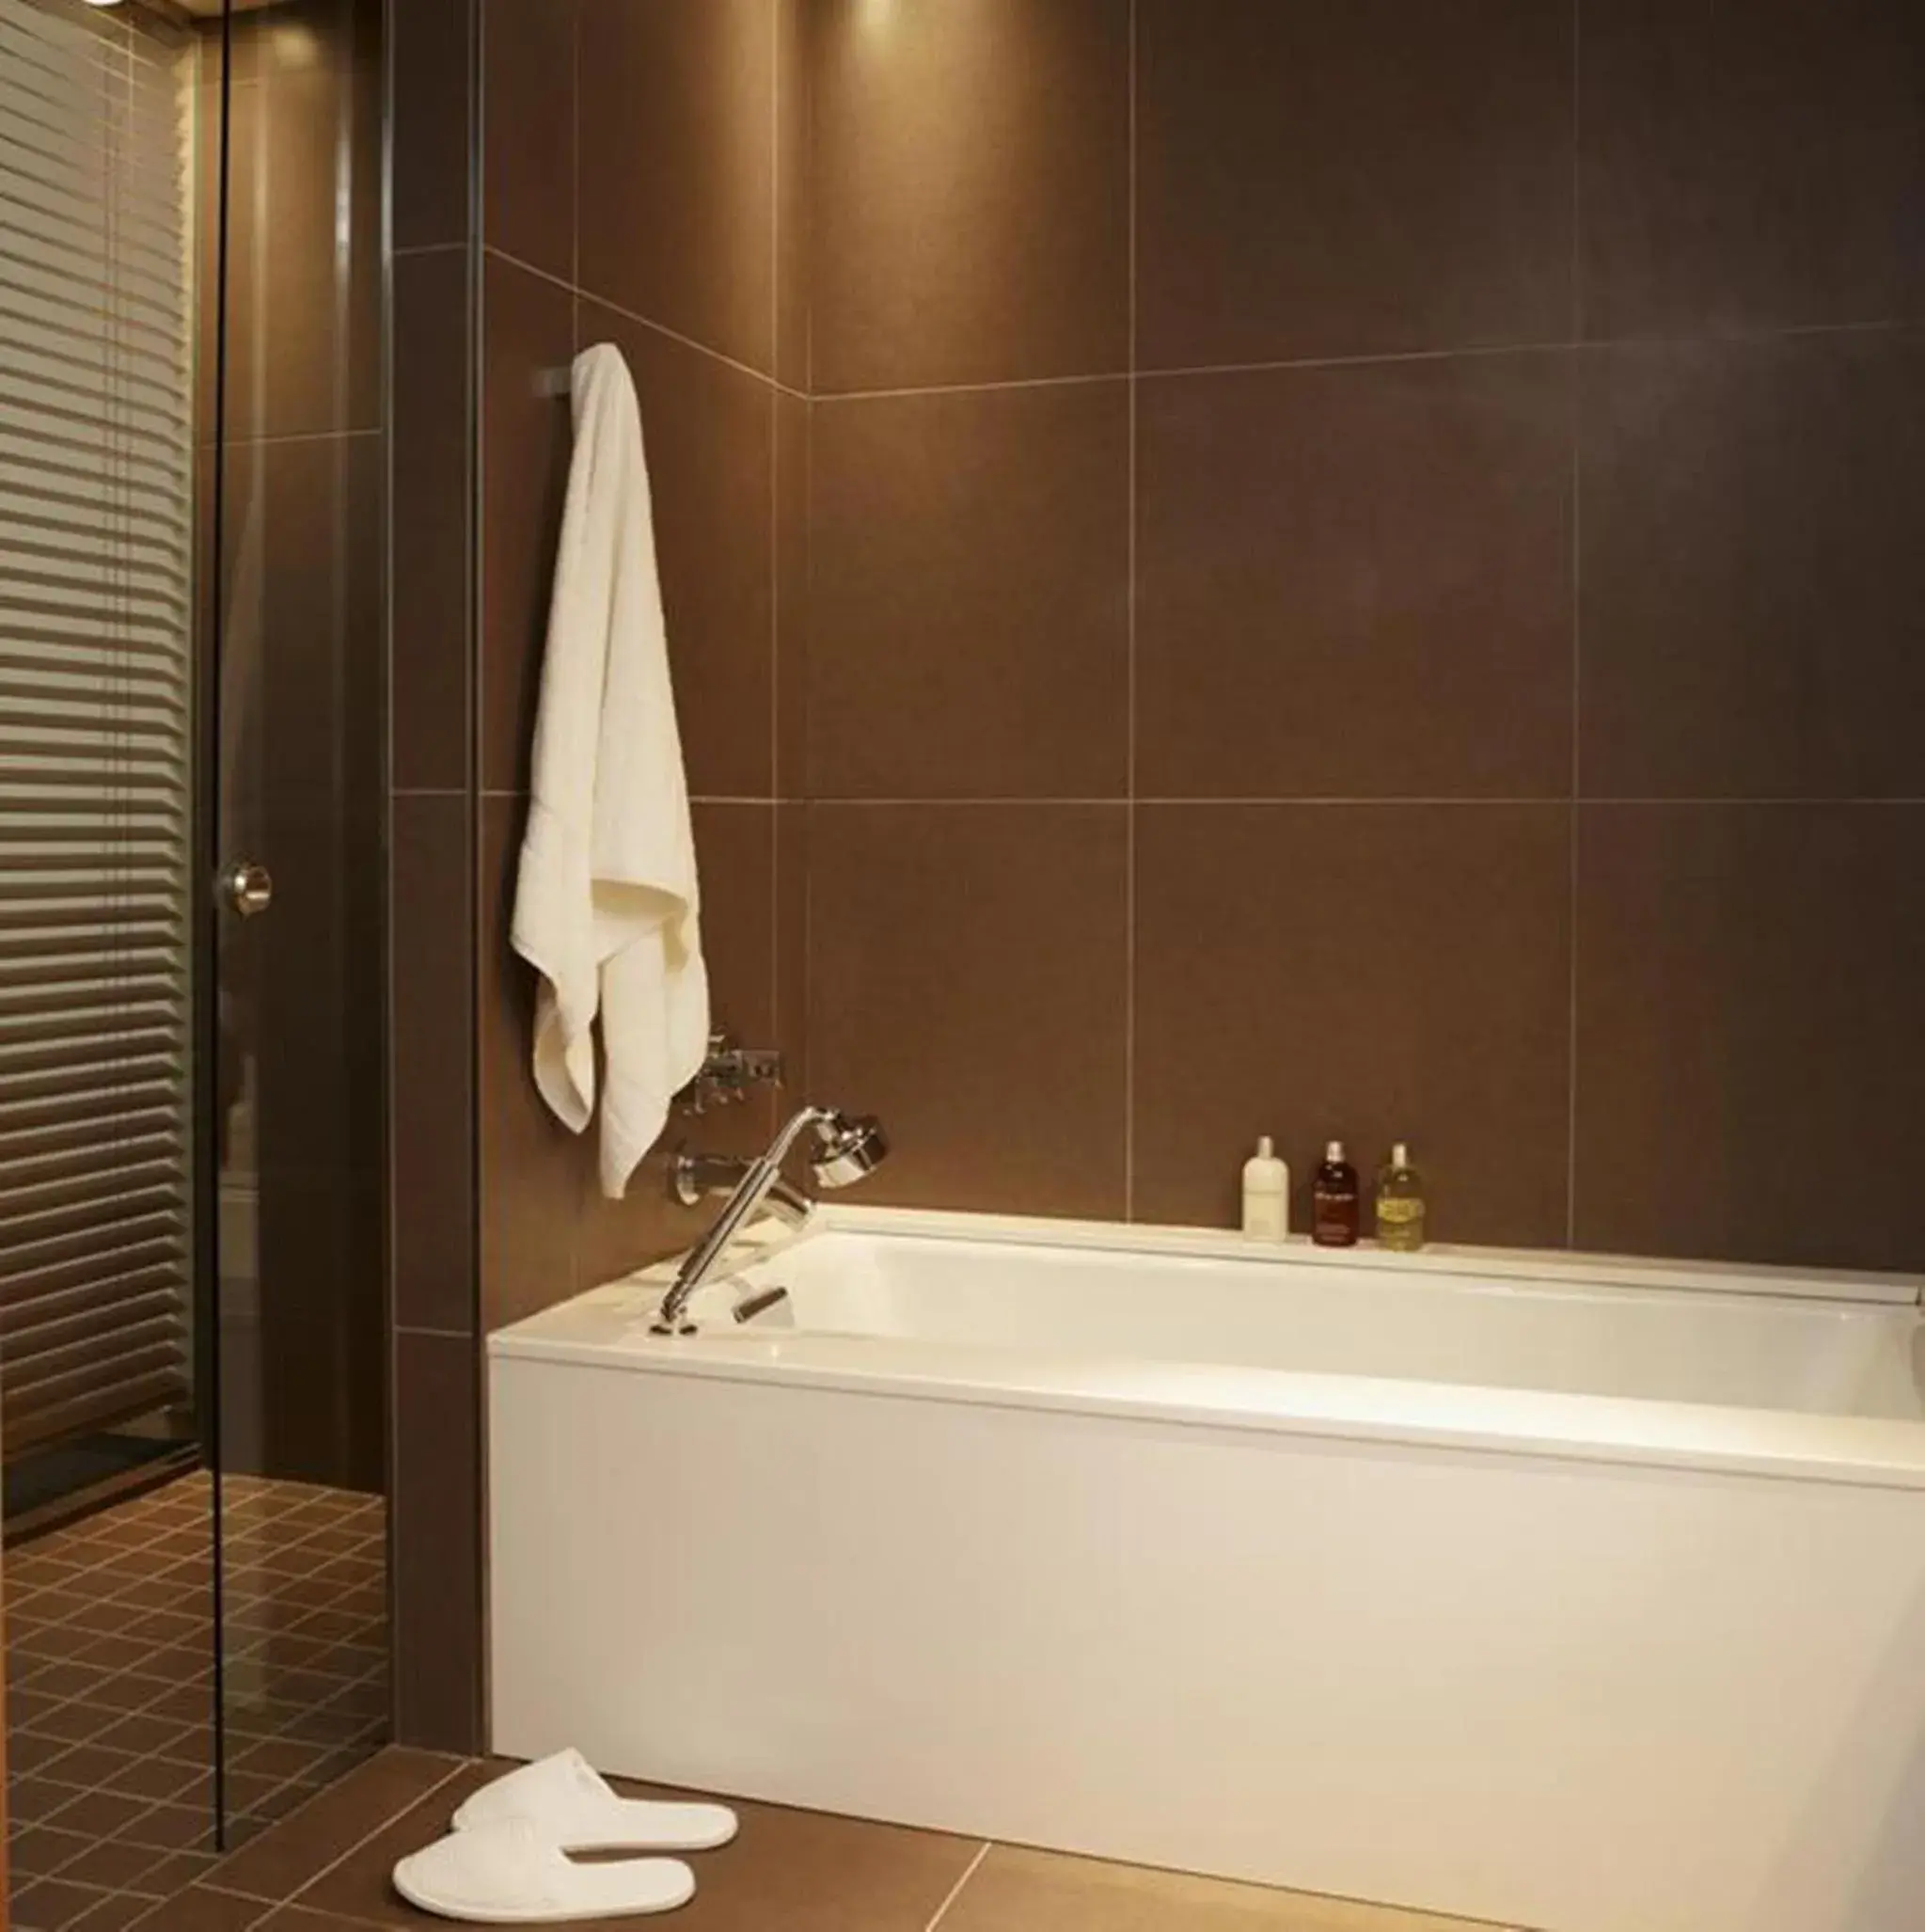 Bathroom in Le Germain Hotel Maple Leaf Square